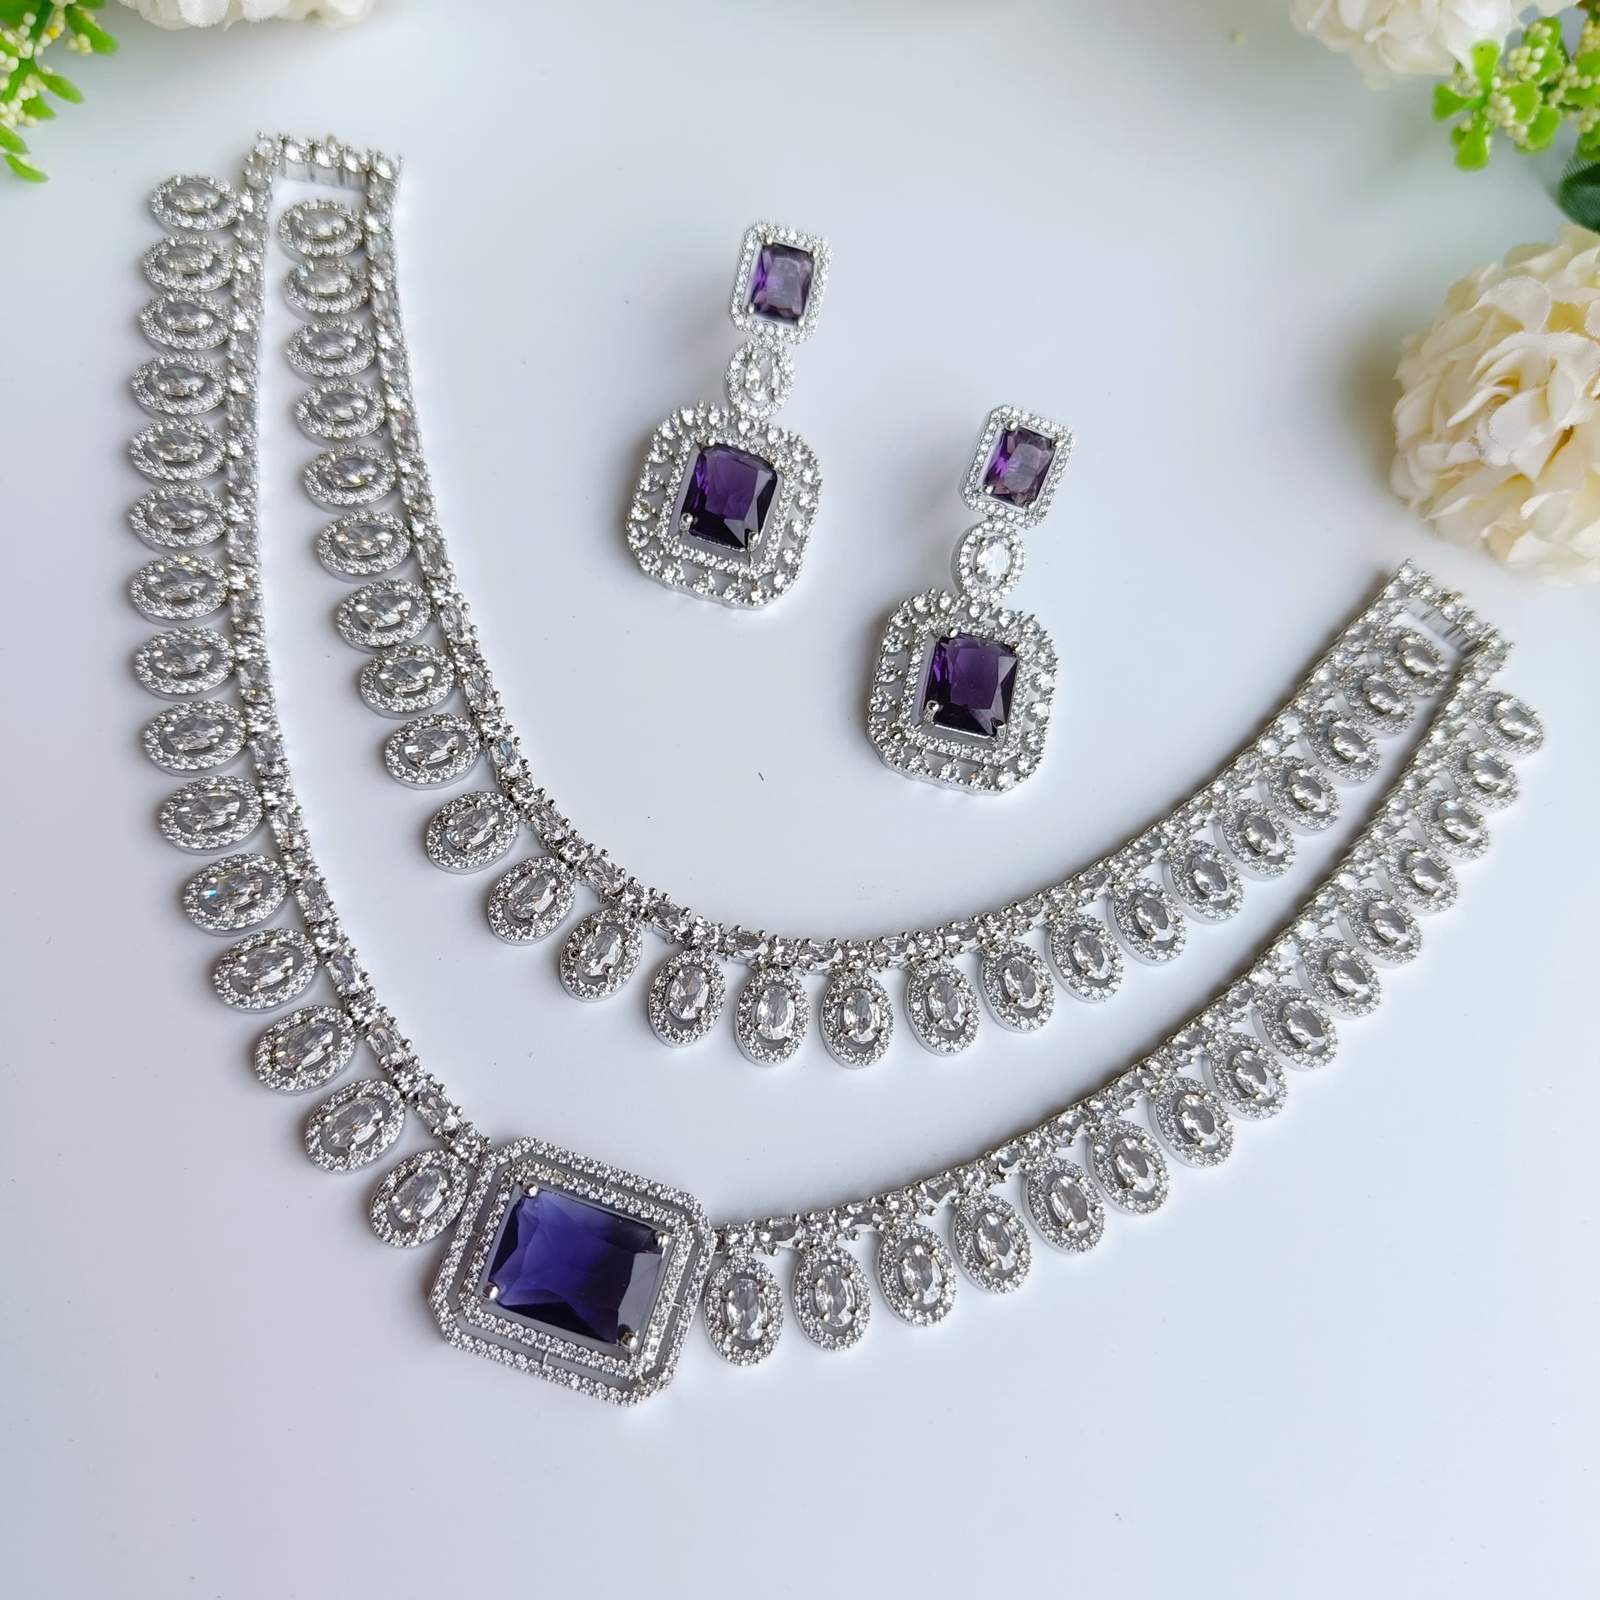 Inaya ad neckpiece - purple